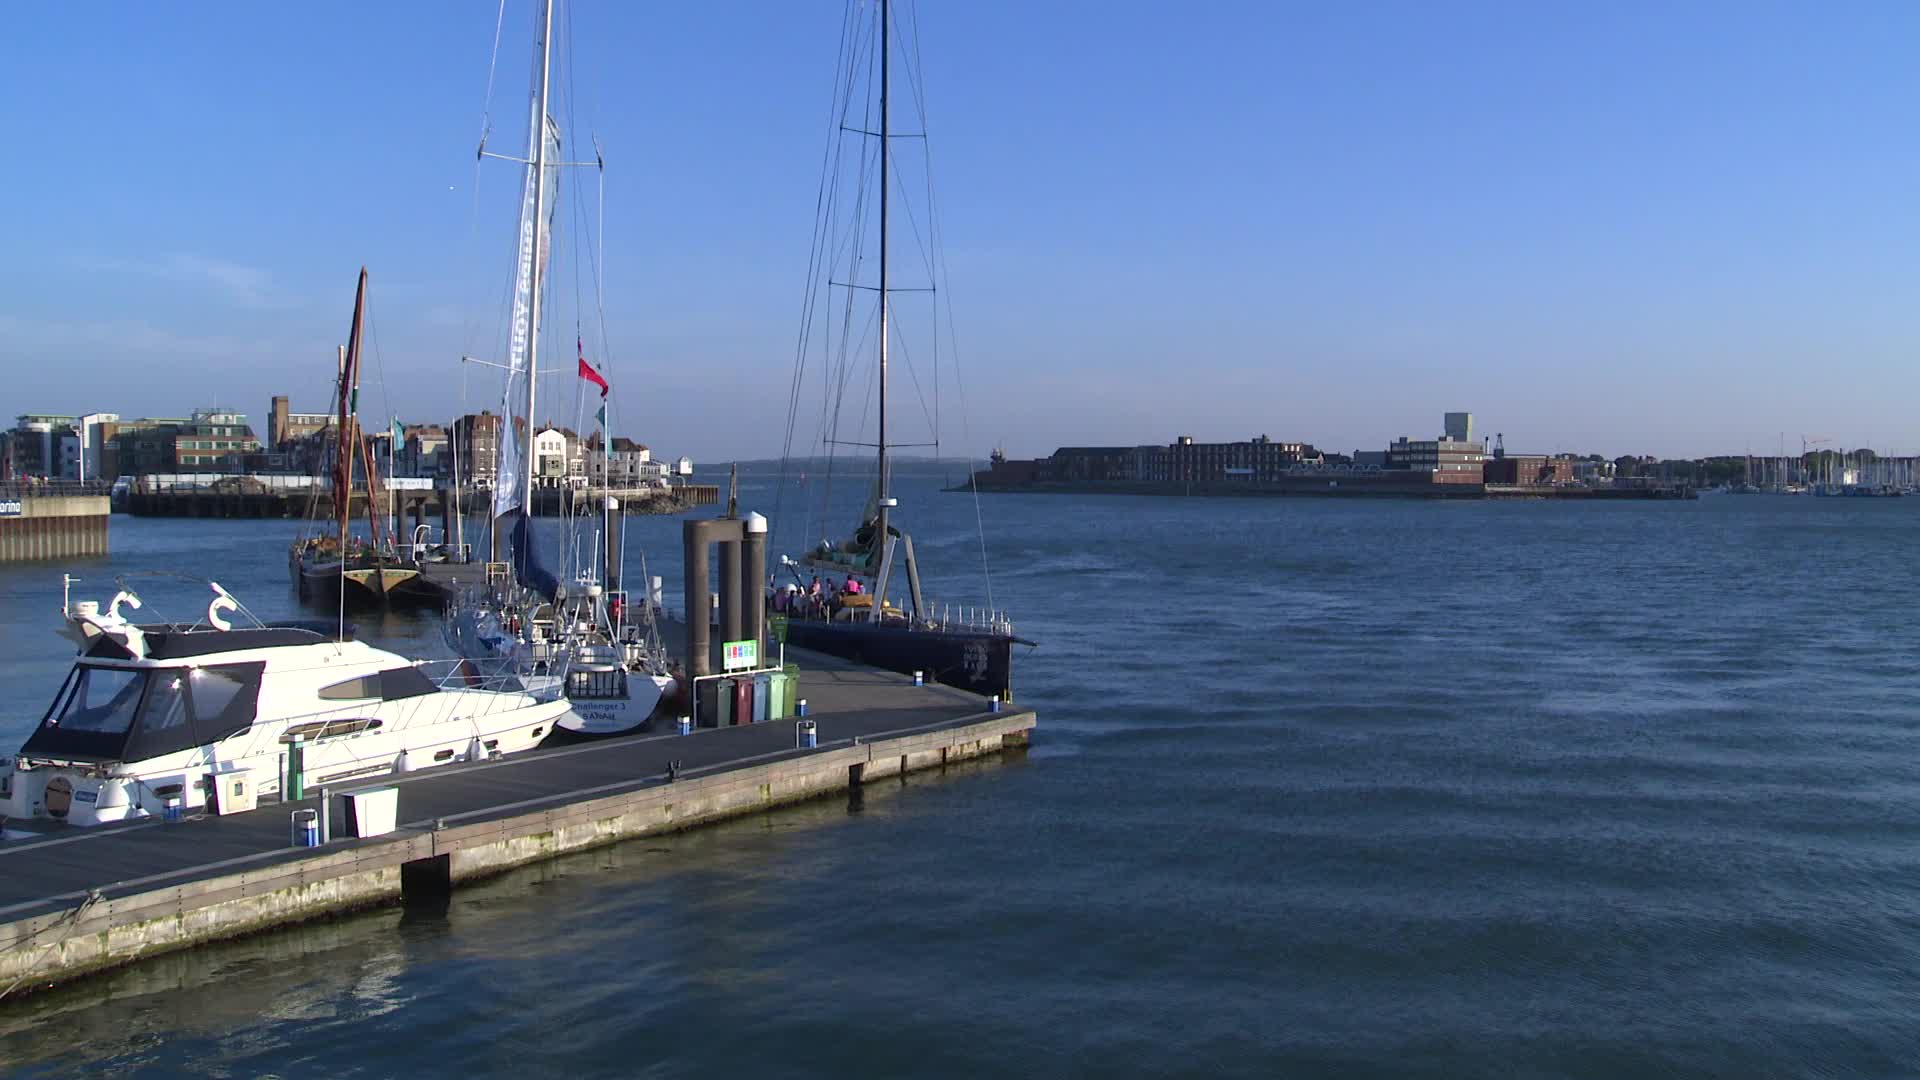 Portsmouth Harbour at Dusk - Commercials - Y8.com